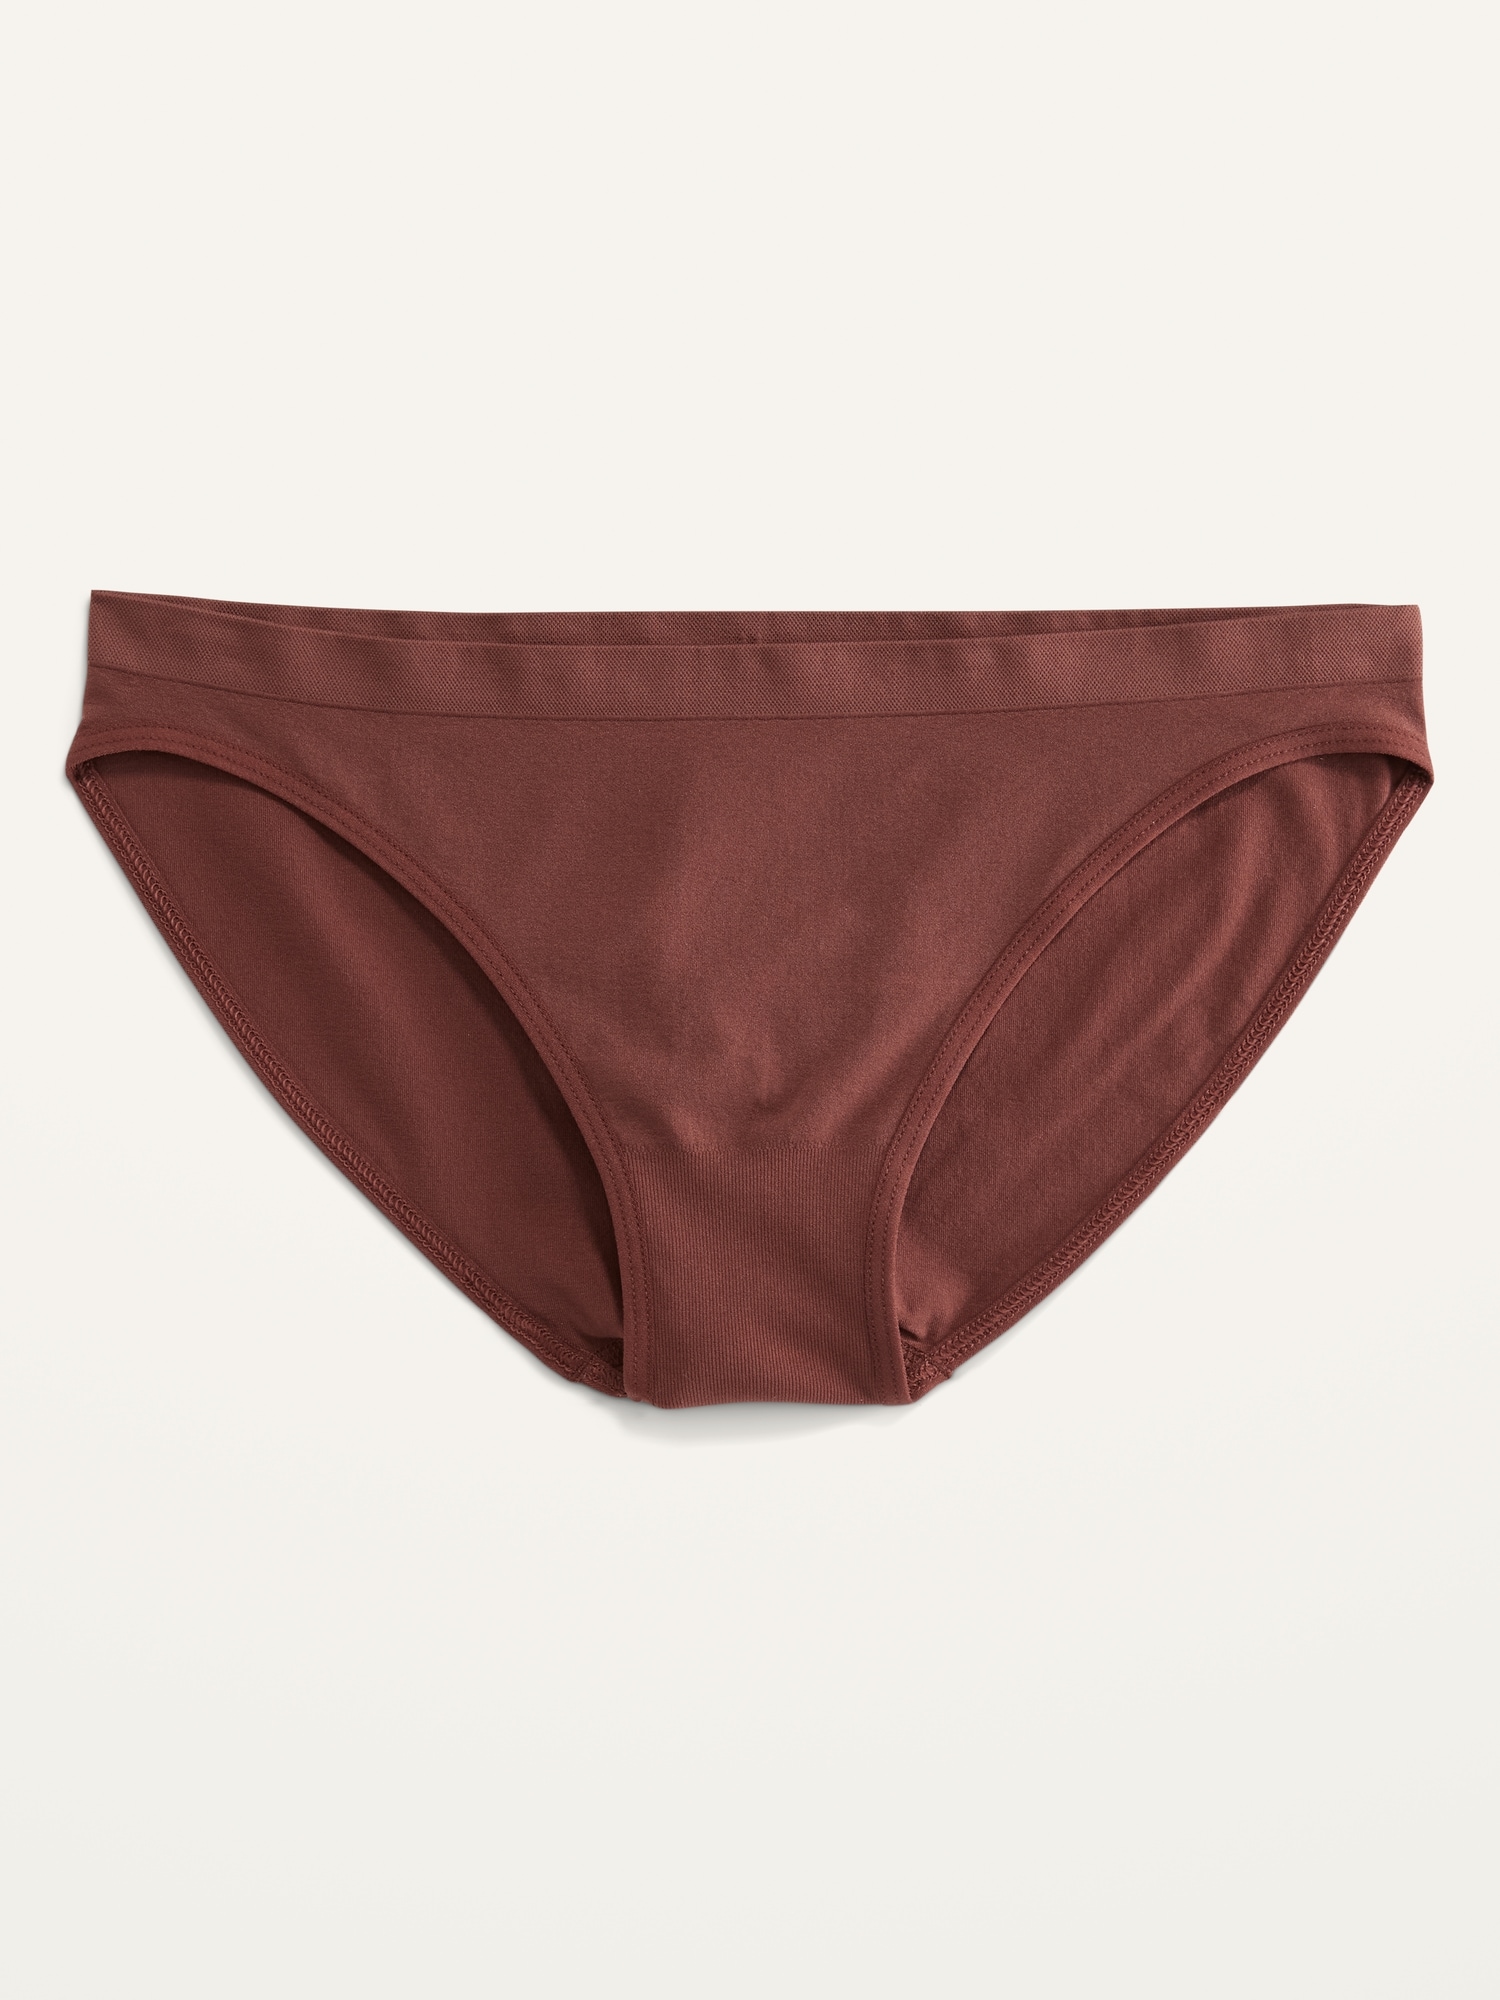 Old Navy Low-Rise Seamless Bikini Underwear for Women brown. 1